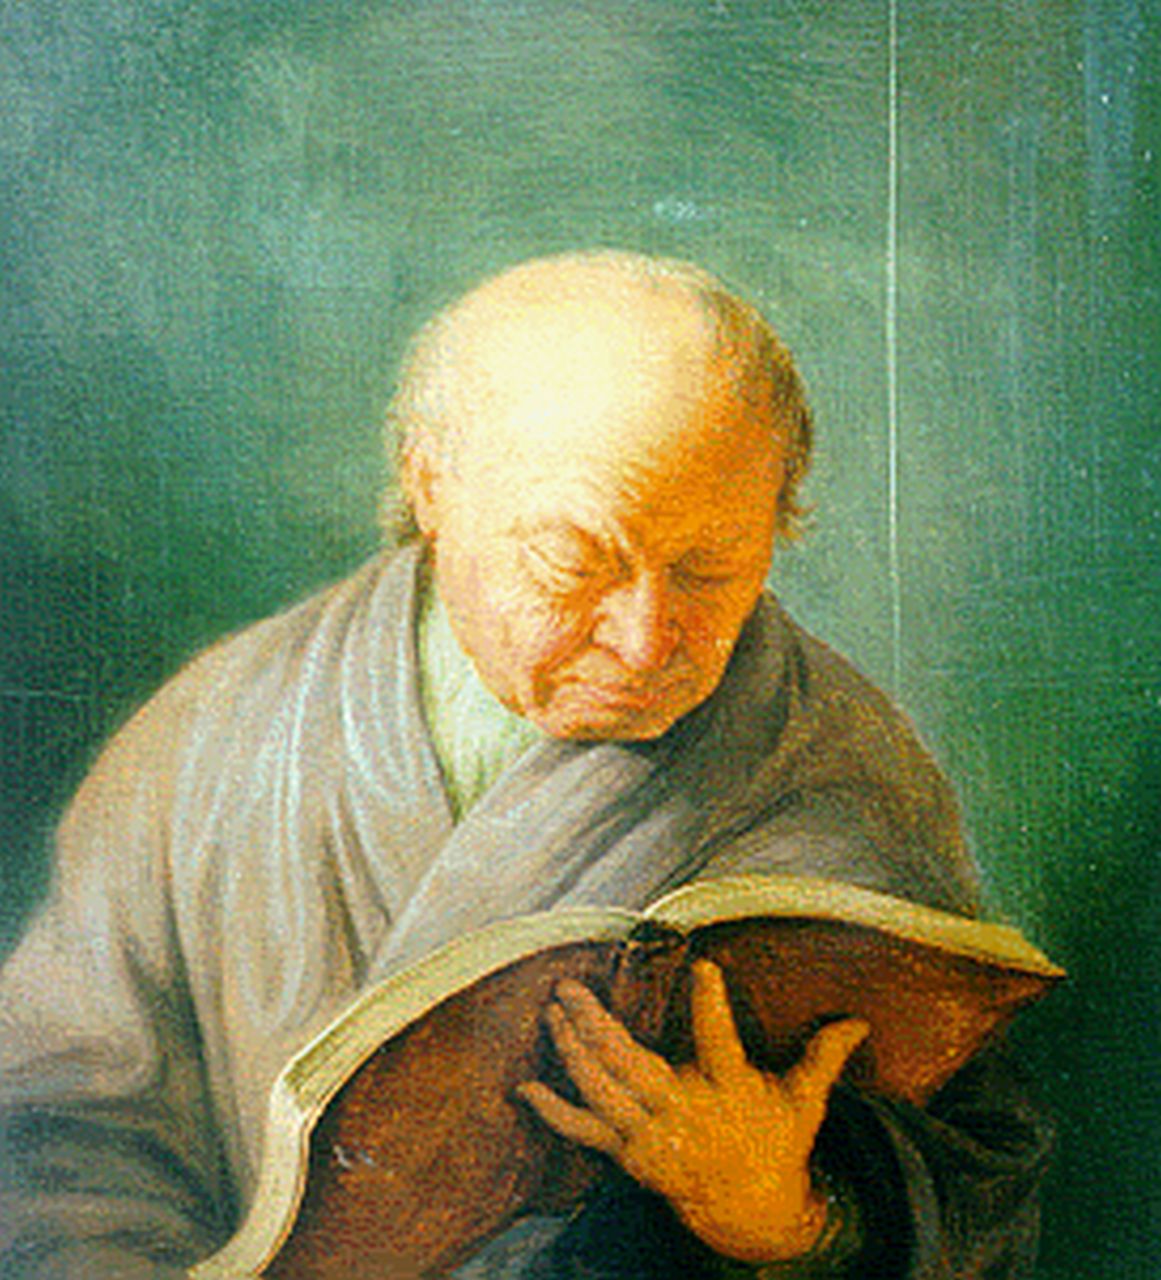 Mieris de Jonge F. van | Frans van Mieris de Jonge, Elderly man with a book, oil on panel 18.2 x 16.8 cm, signed on the reverse and dated 1740